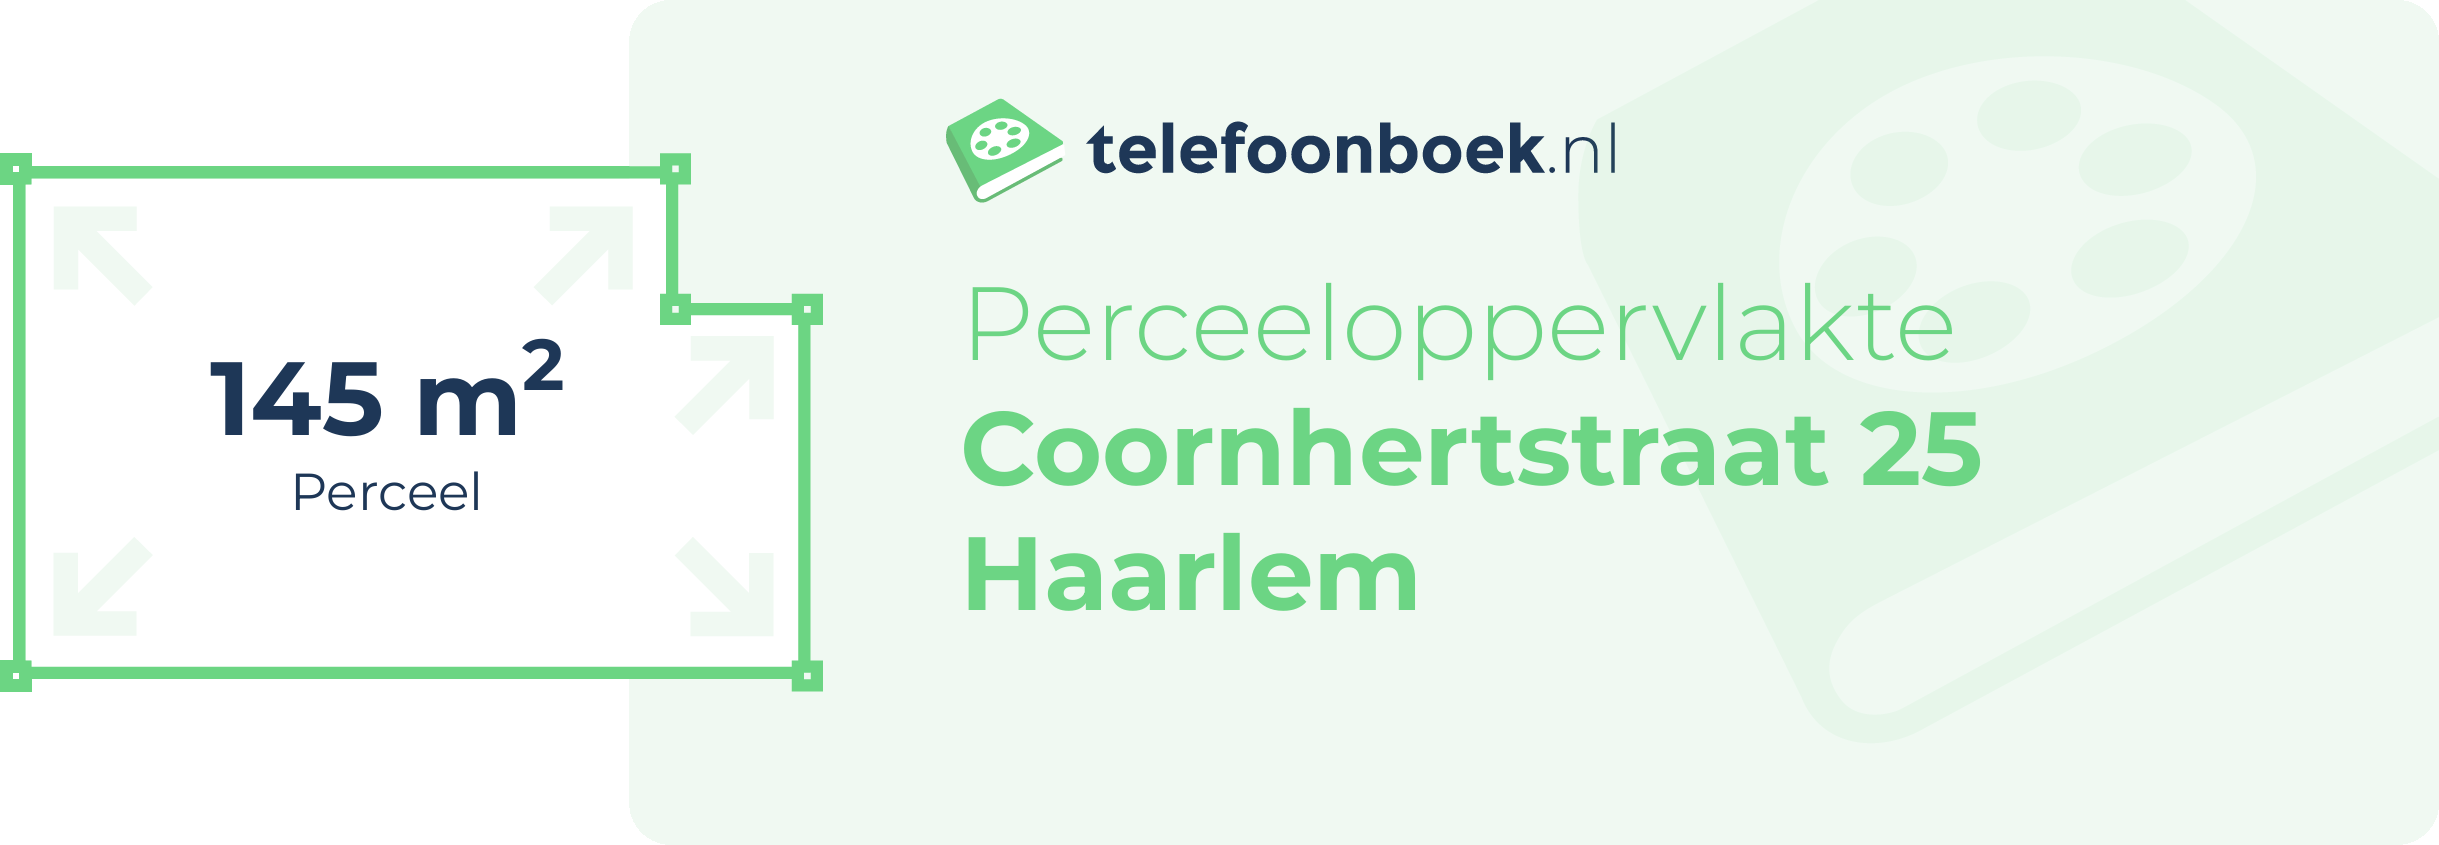 Perceeloppervlakte Coornhertstraat 25 Haarlem